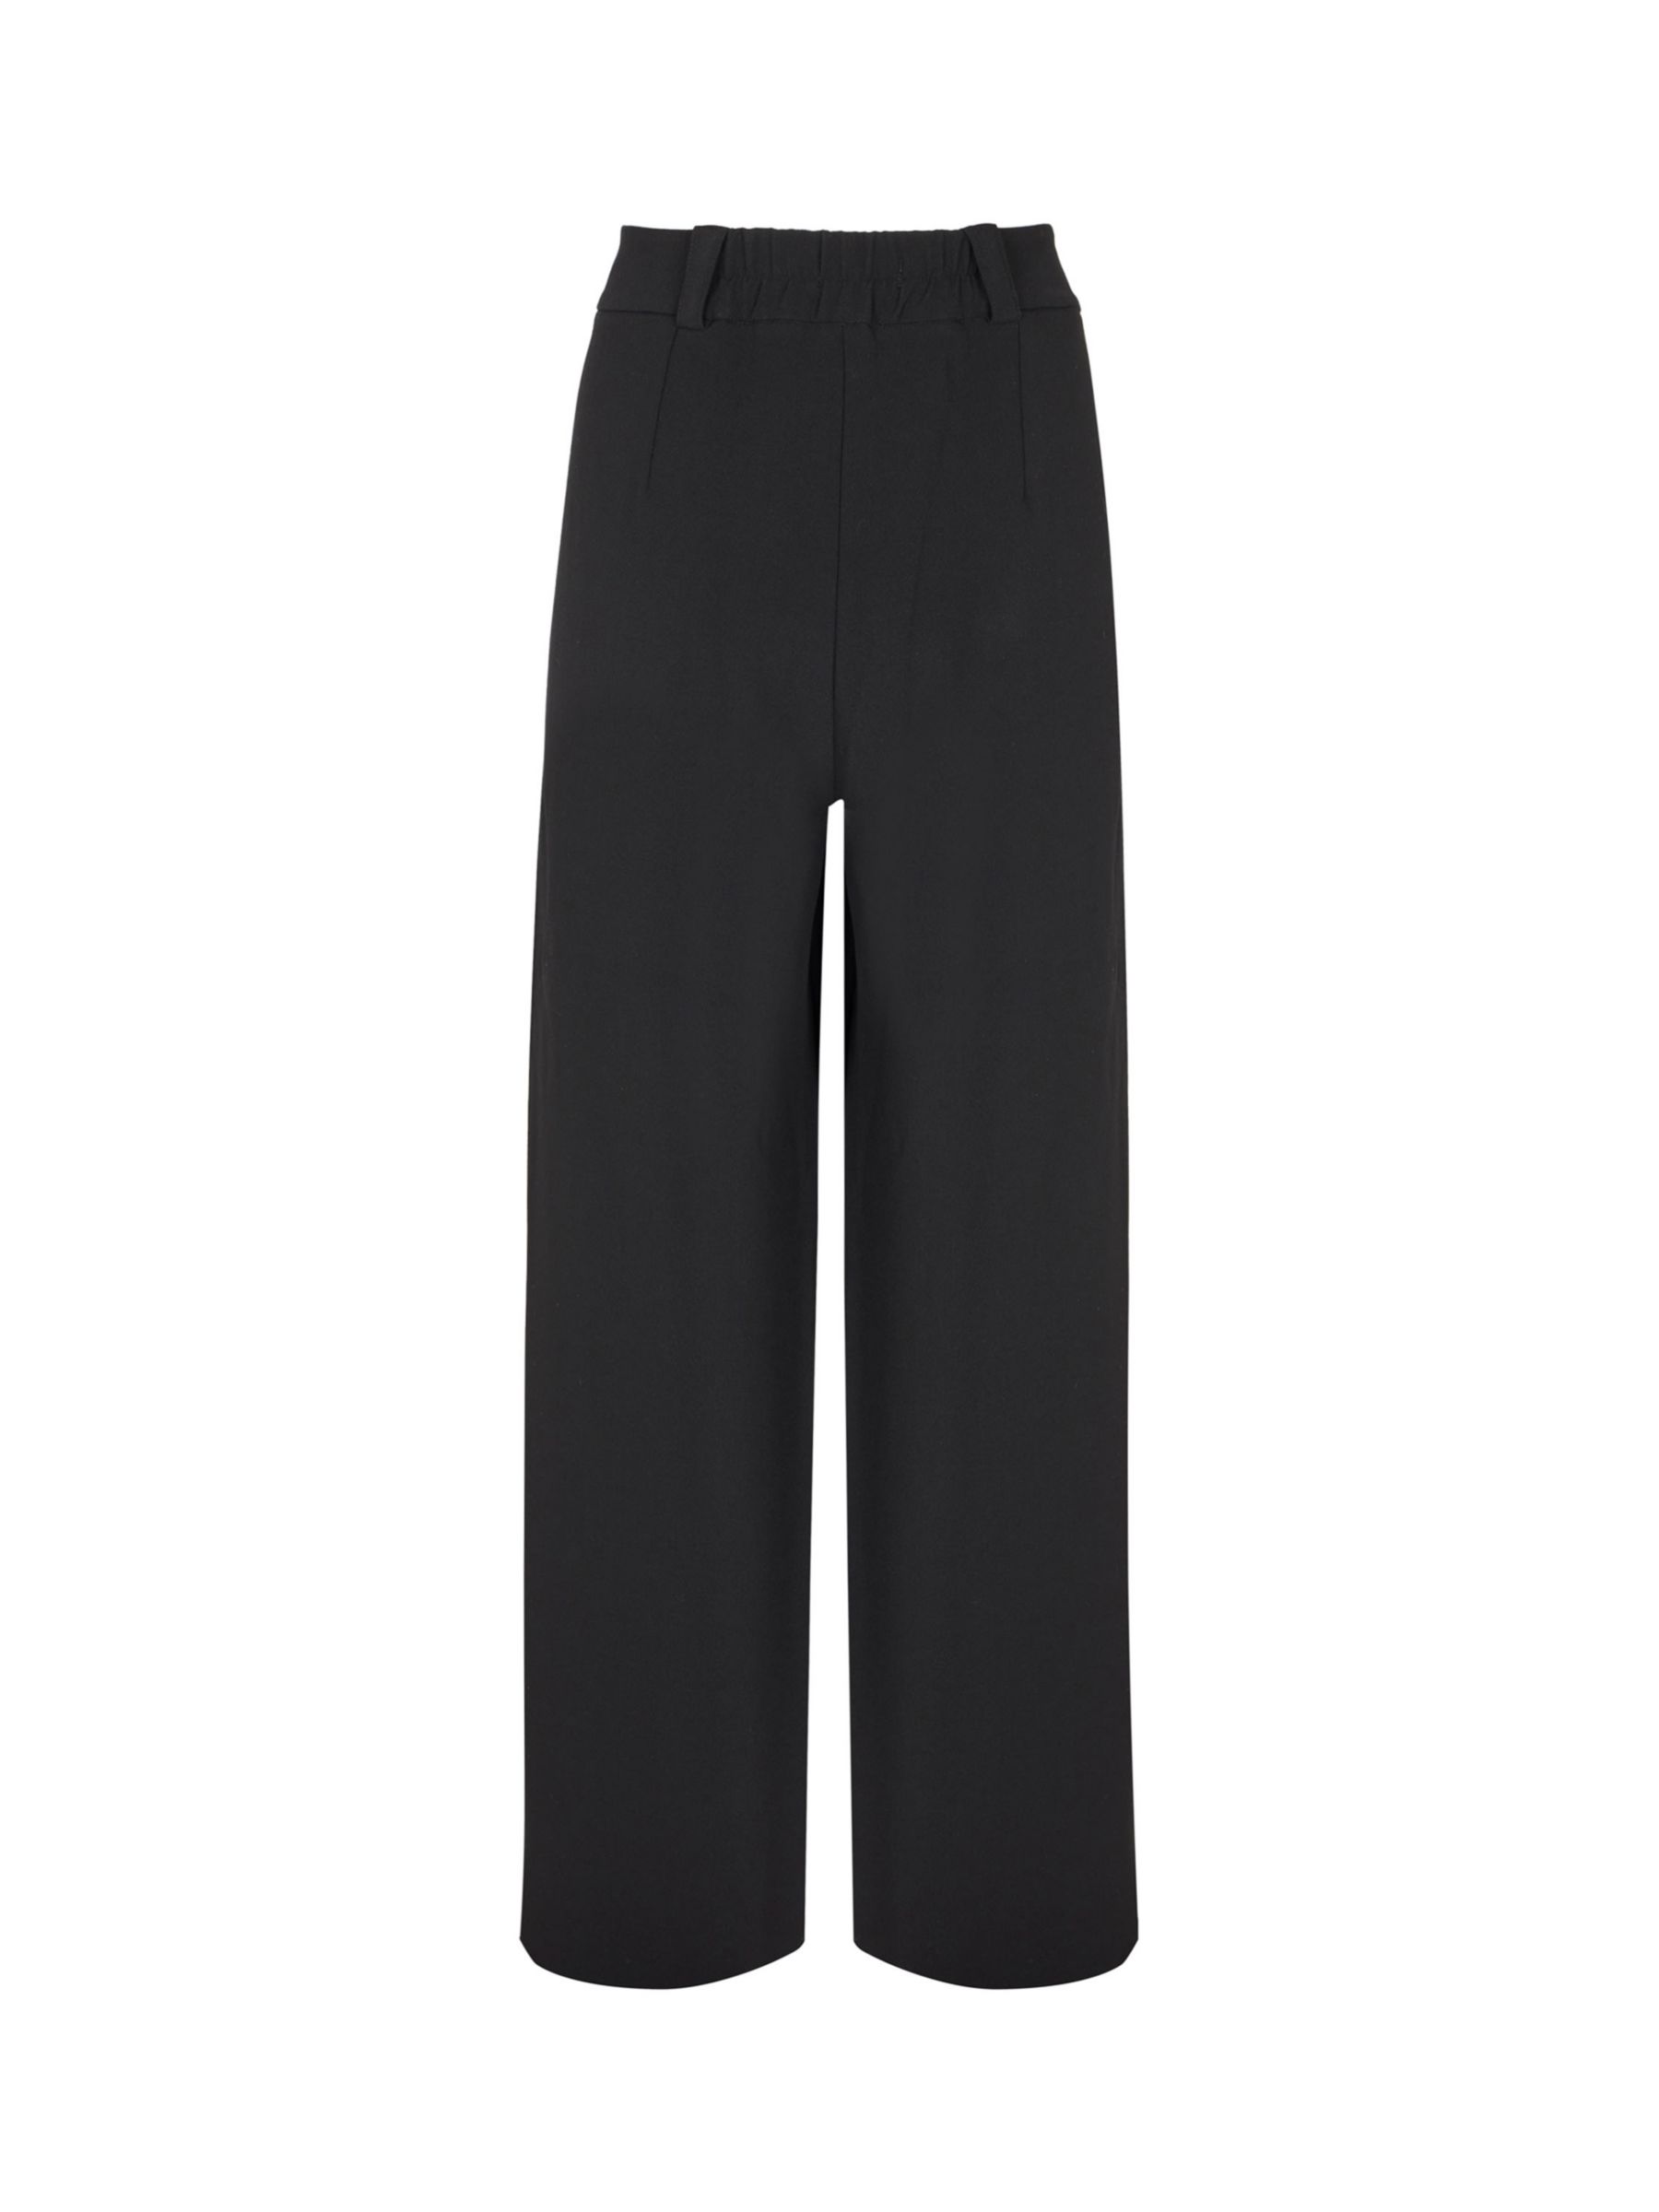 Mint Velvet Straight Front Pleat Trousers, Black at John Lewis & Partners